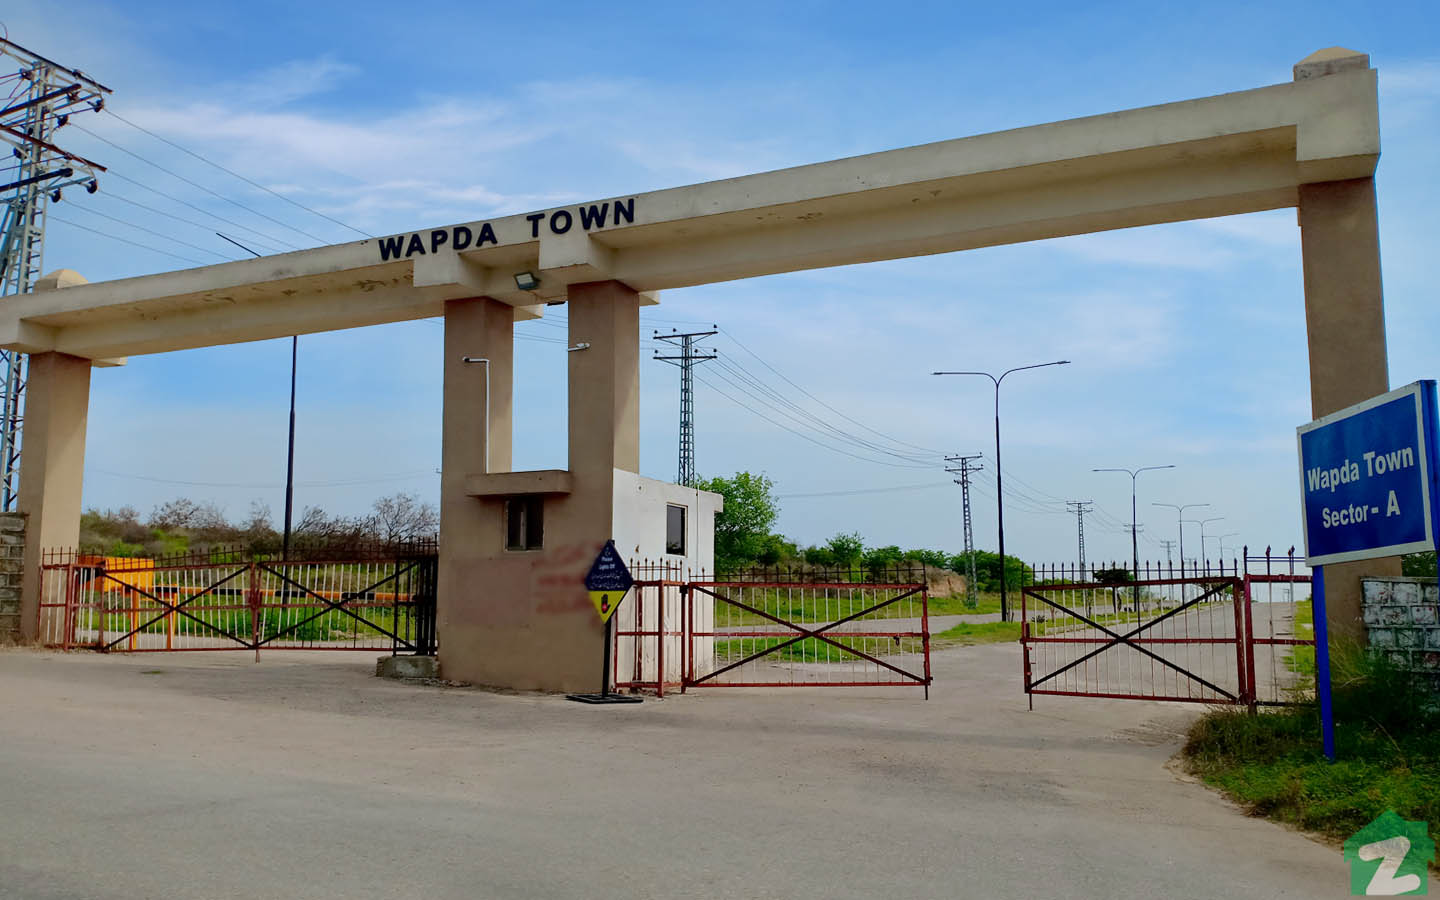 WAPDA-town-gate